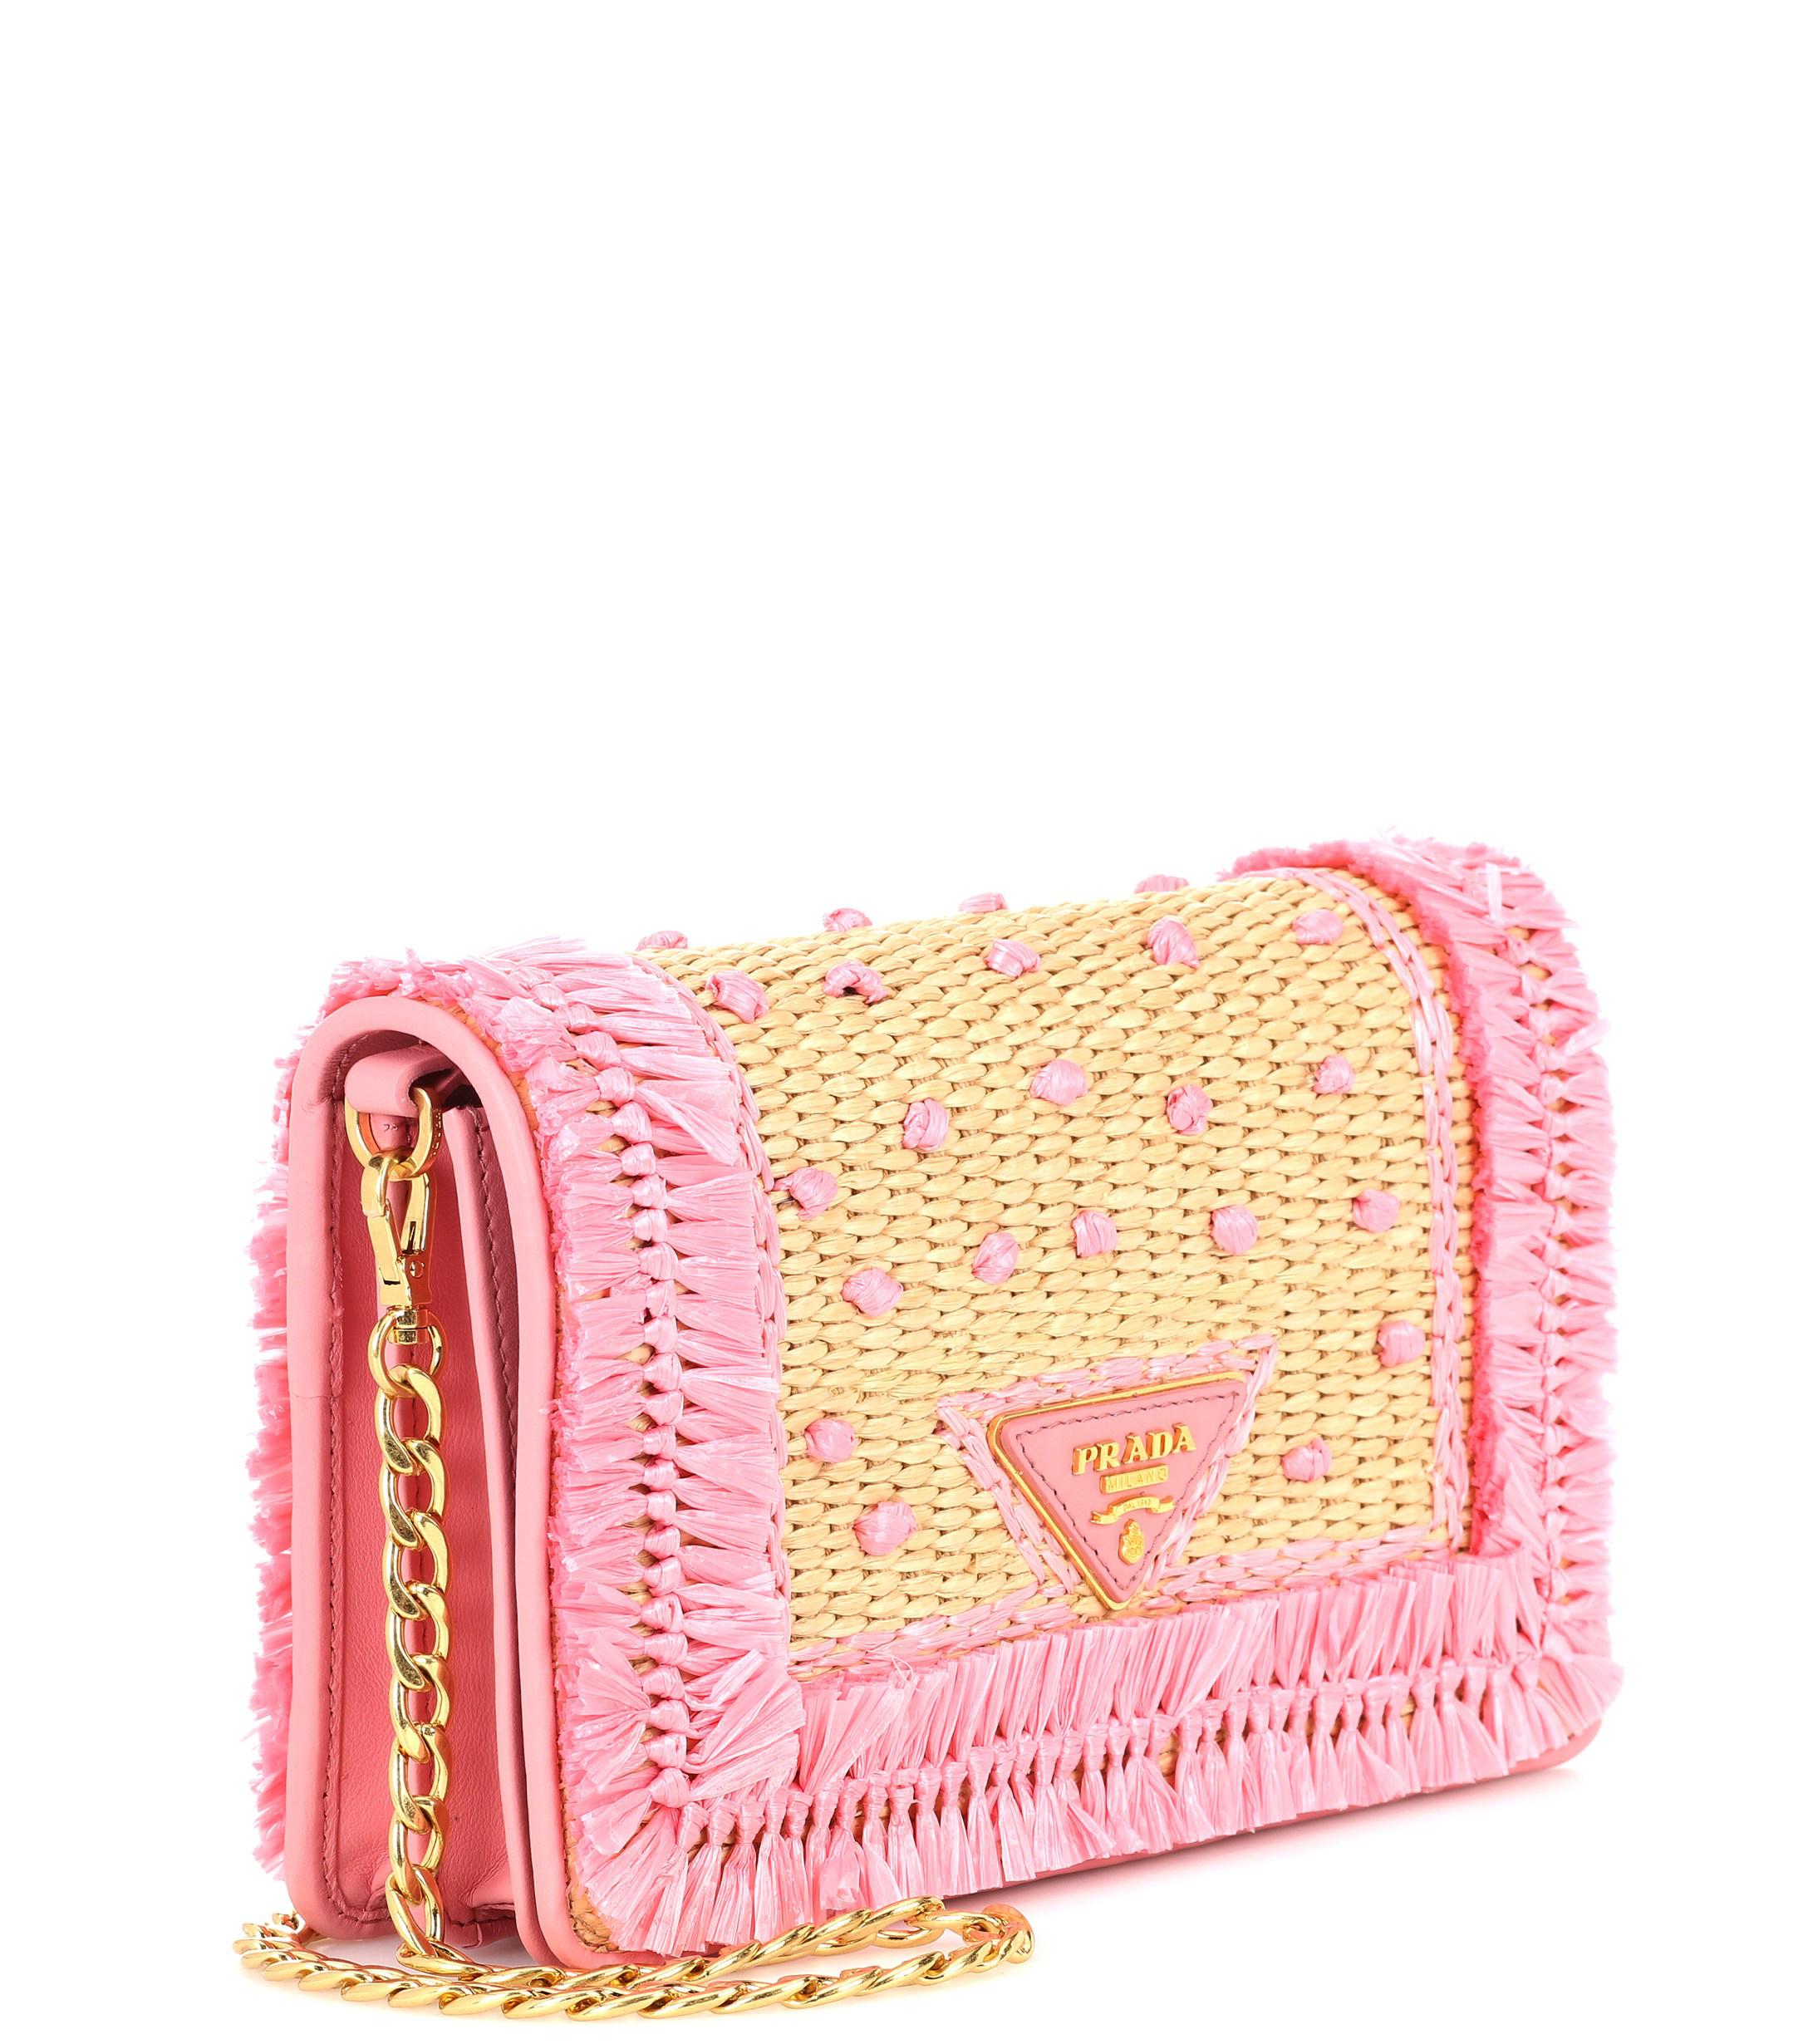 Prada Pink Gathered Leather Chain Shoulder Bag Prada